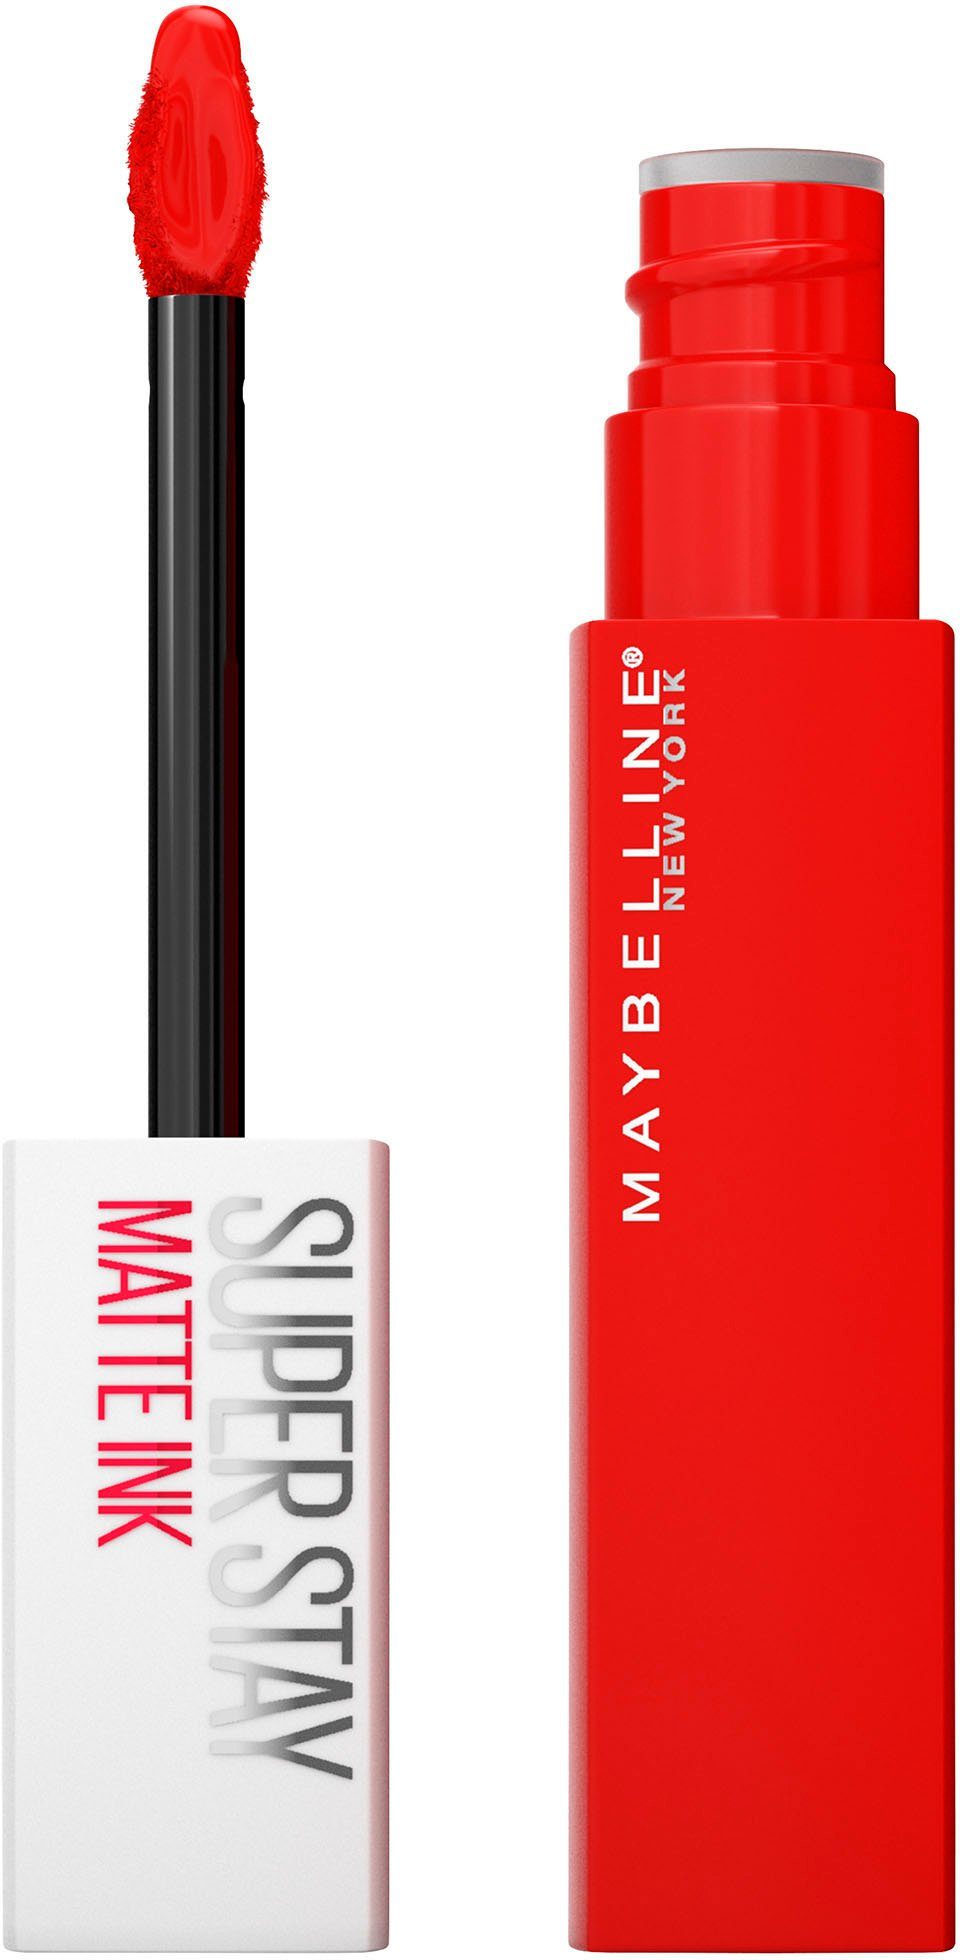 MAYBELLINE NEW YORK Stay 320 Matte Lippenstift Ink Individualist Up Spiced Super